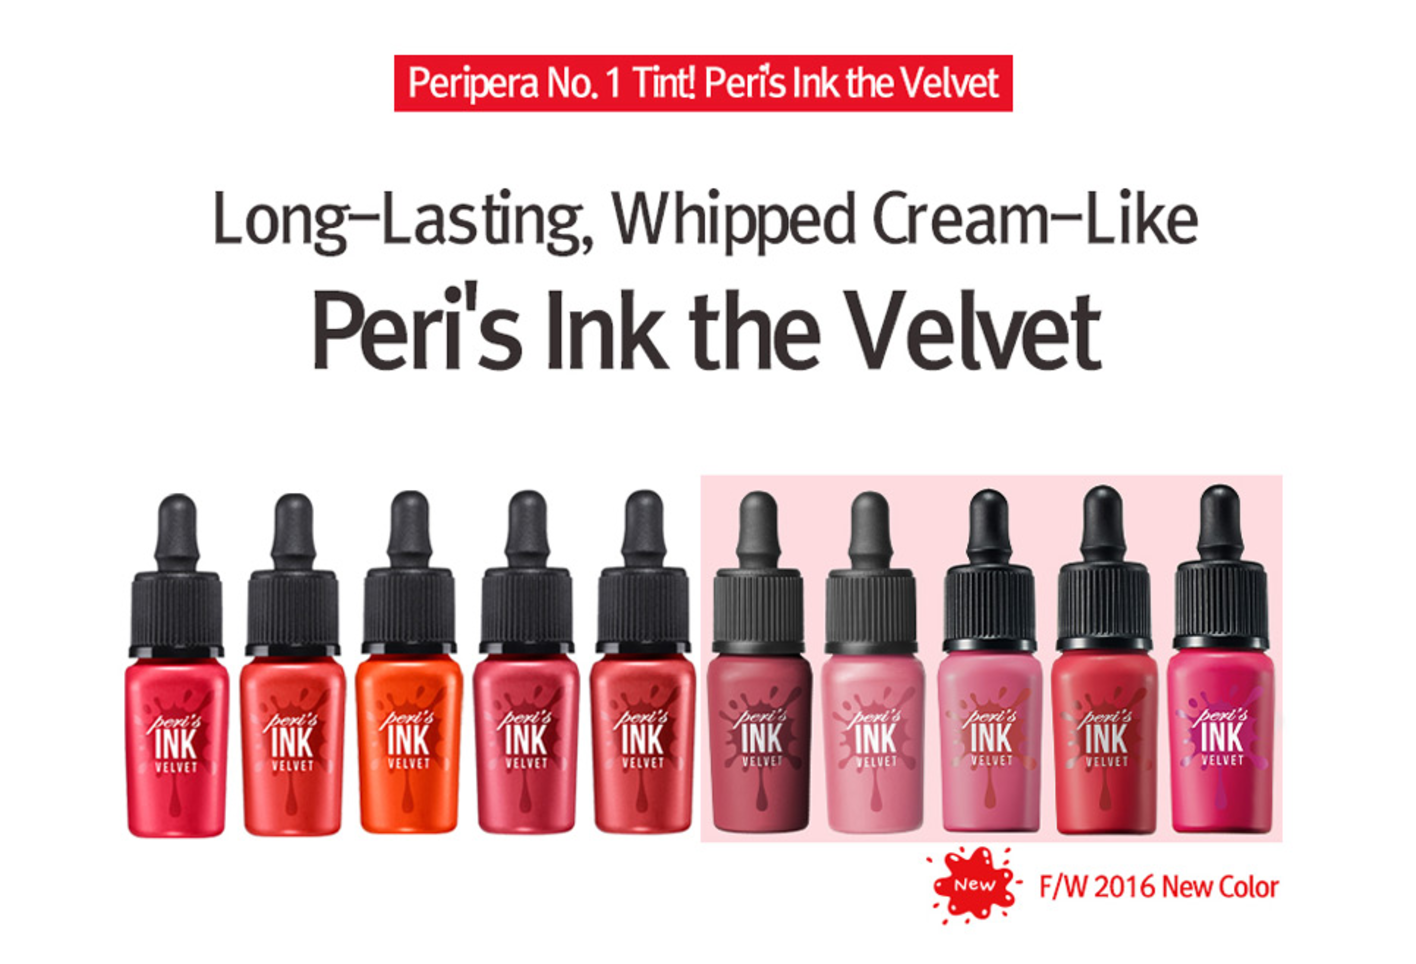 MY SUGARCOFFEE: REVIEW : PeriPera's Peri's Ink Velvet